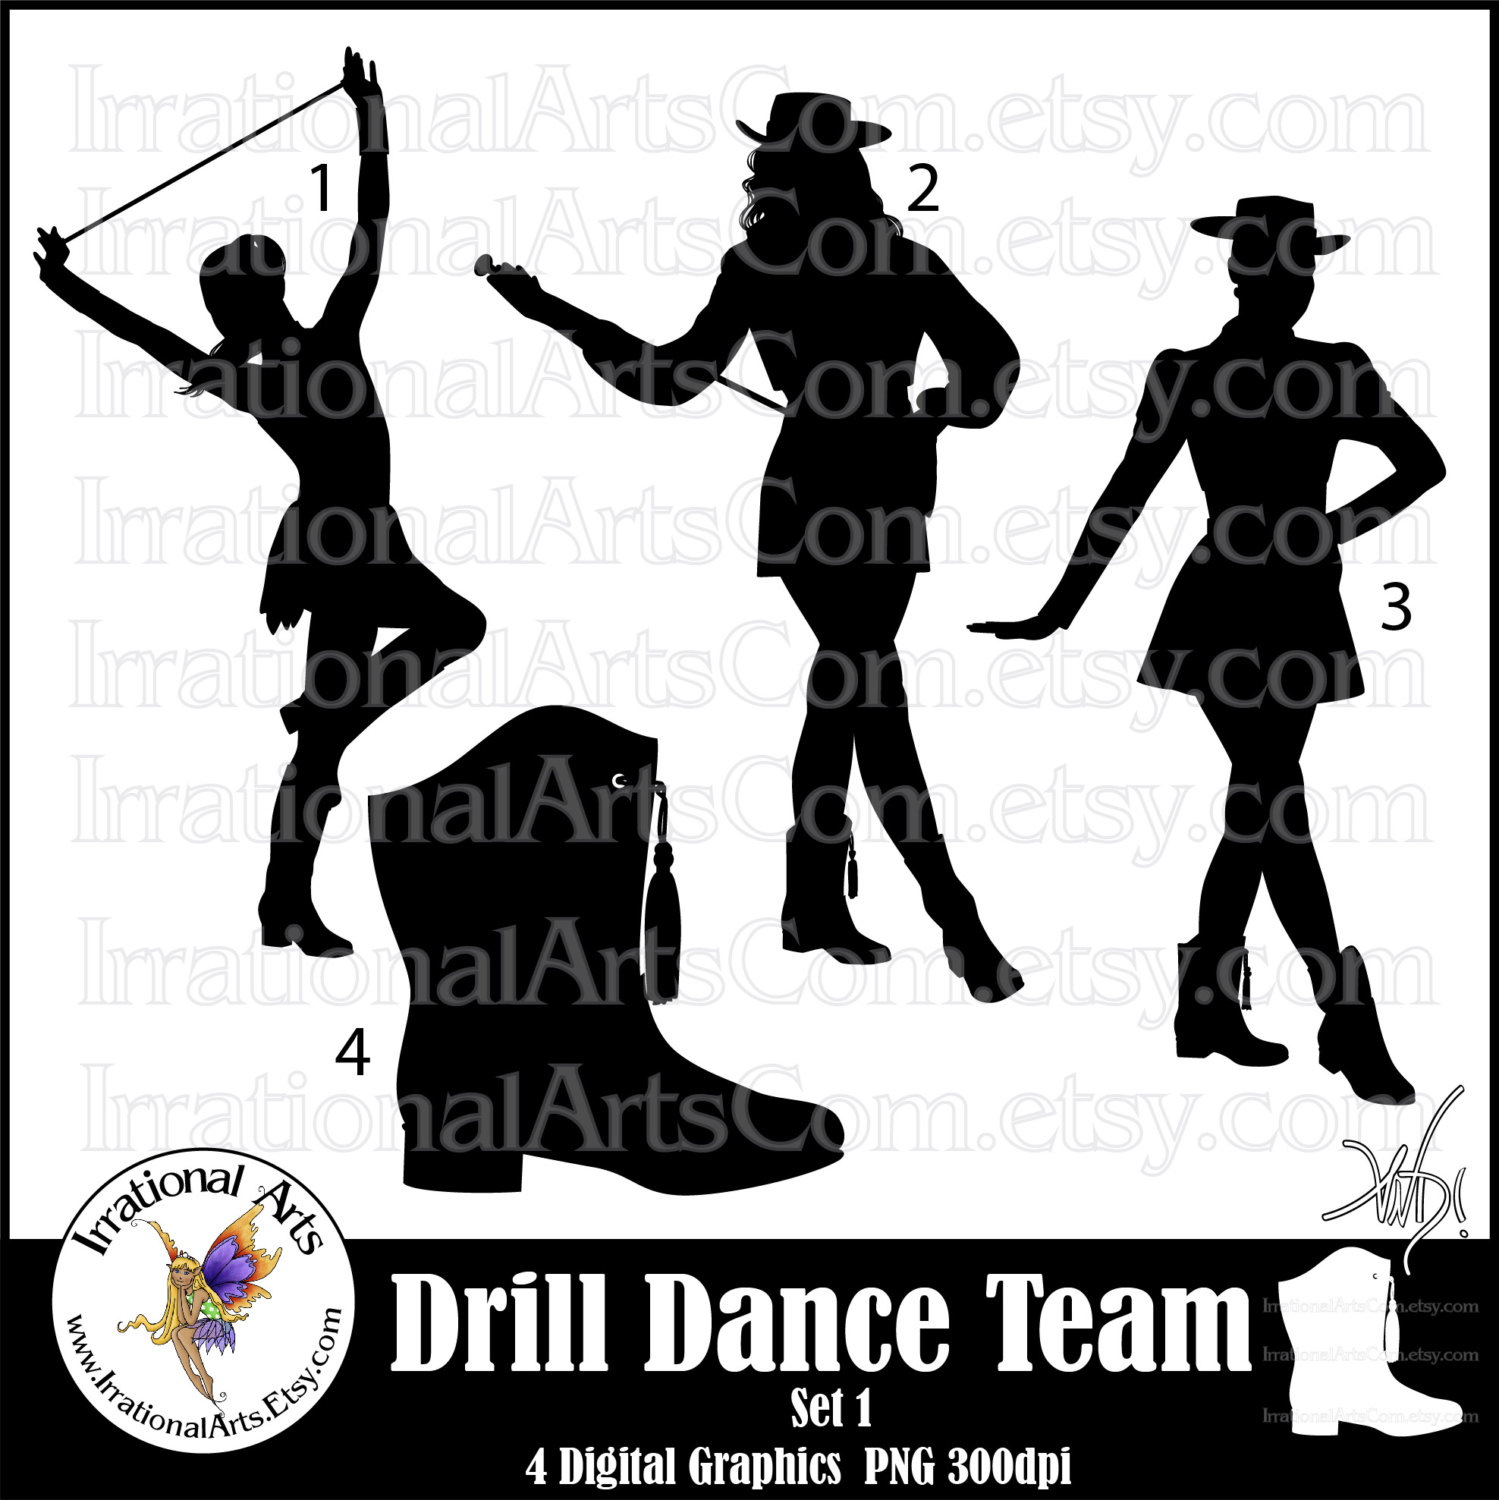 Drill Dance Team Silhouettes 